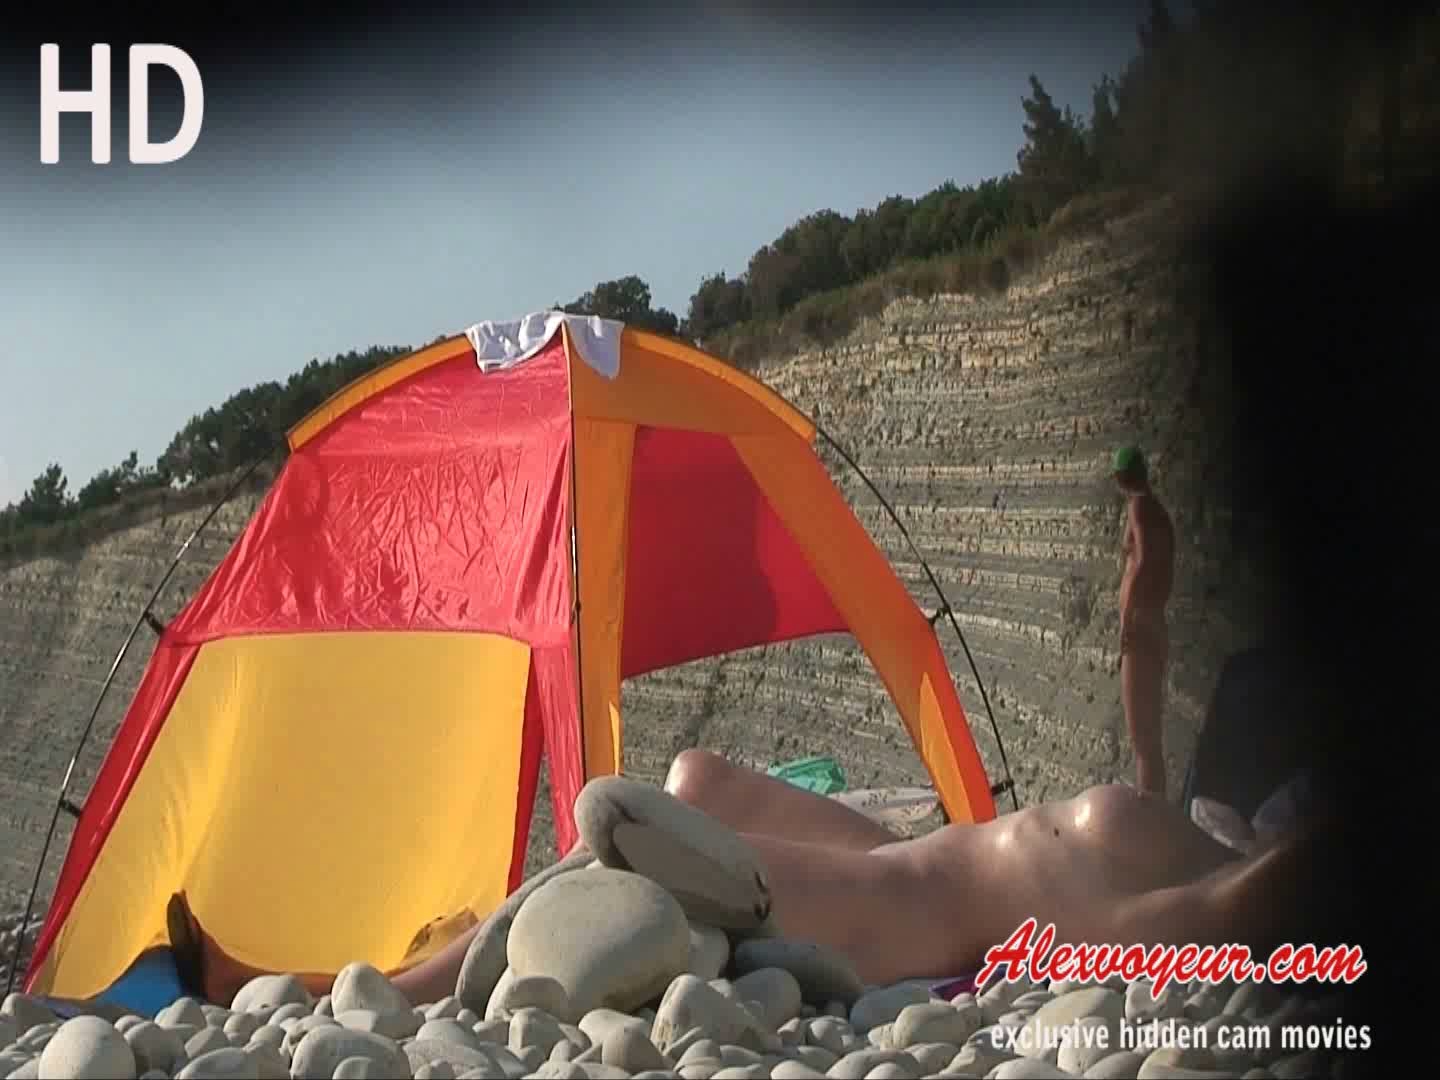 Voyeur videos of girls on nude beaches flashing bodies